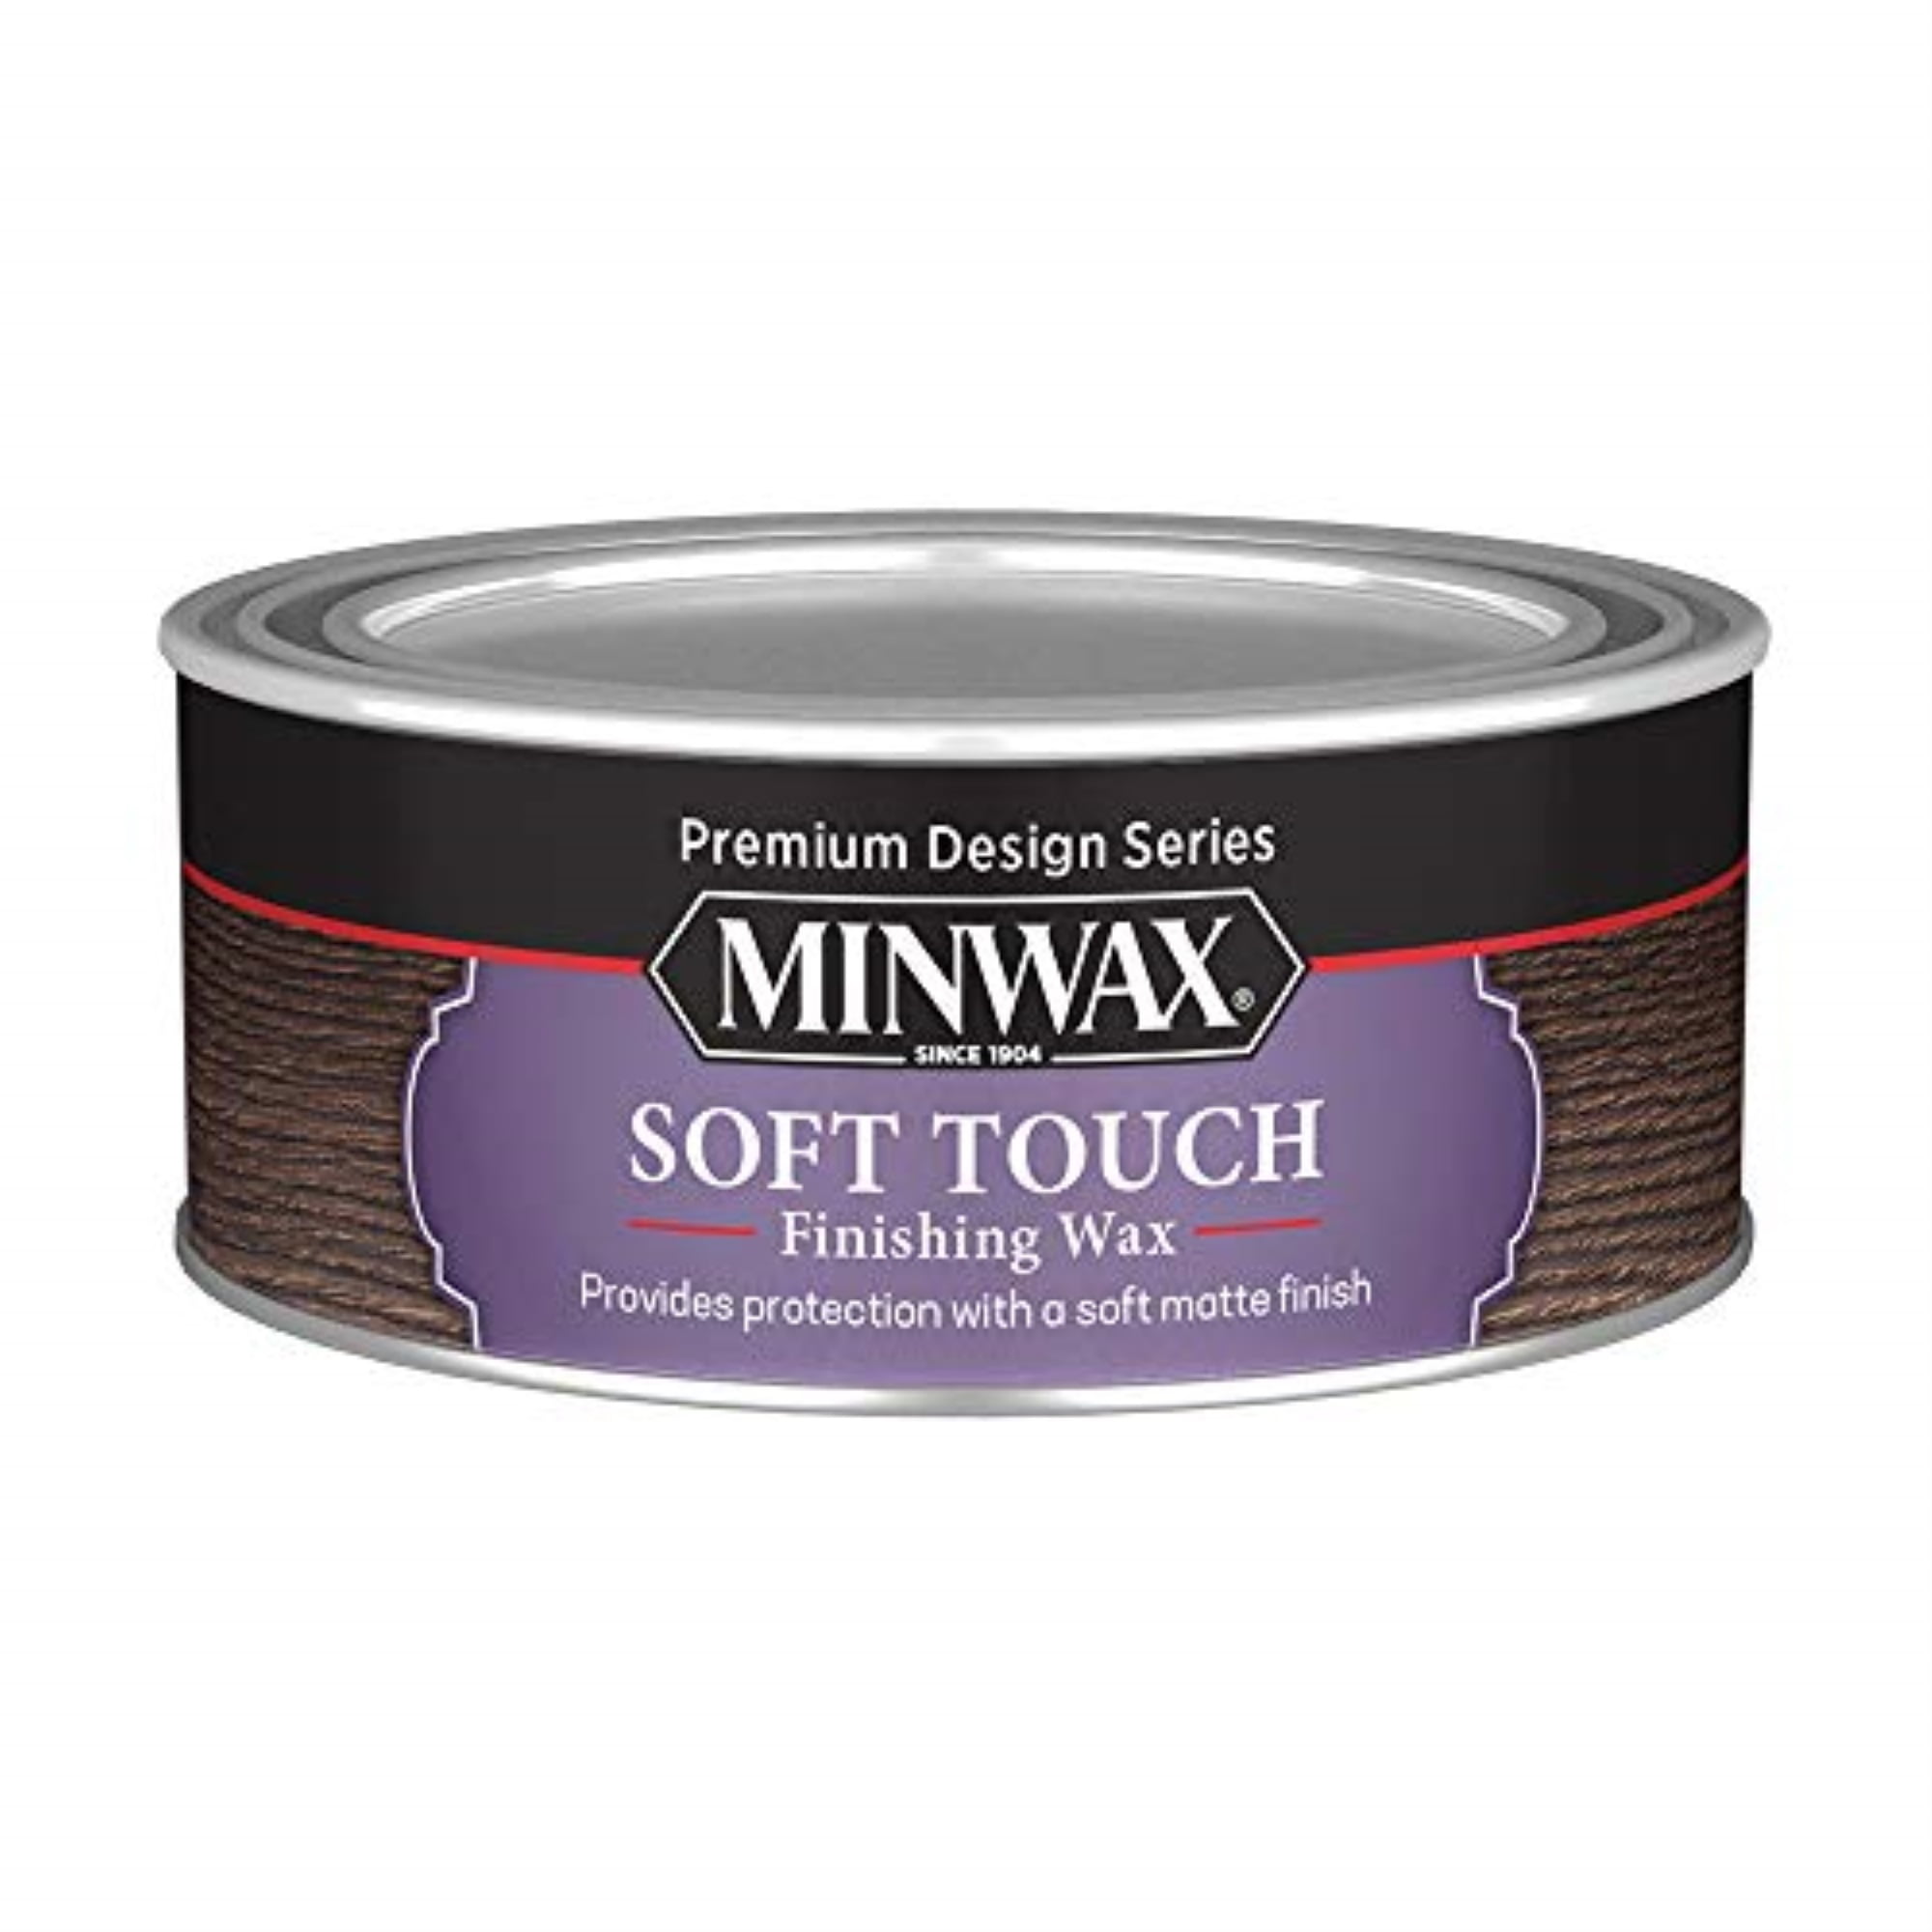 Minwax 8 oz. Soft Touch Finishing Wax